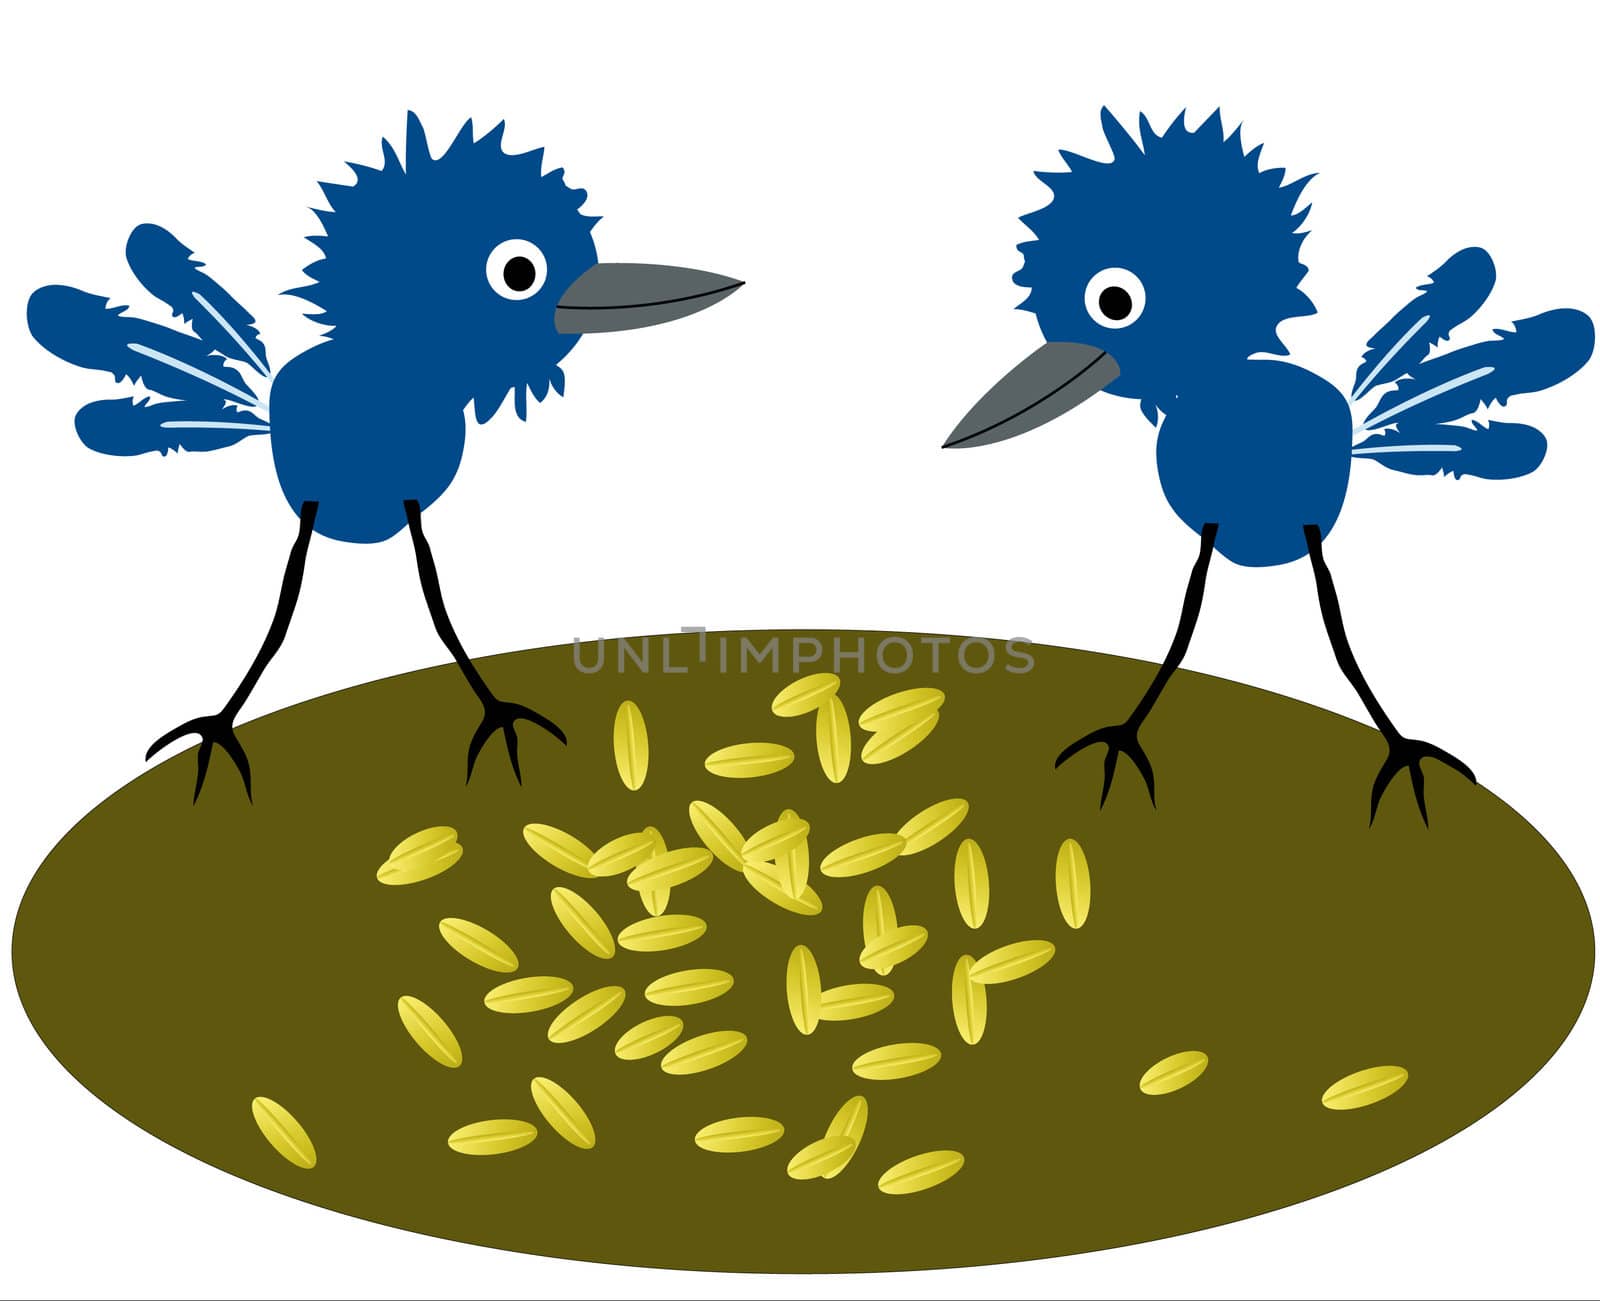 Two birdies pecking spilt grain